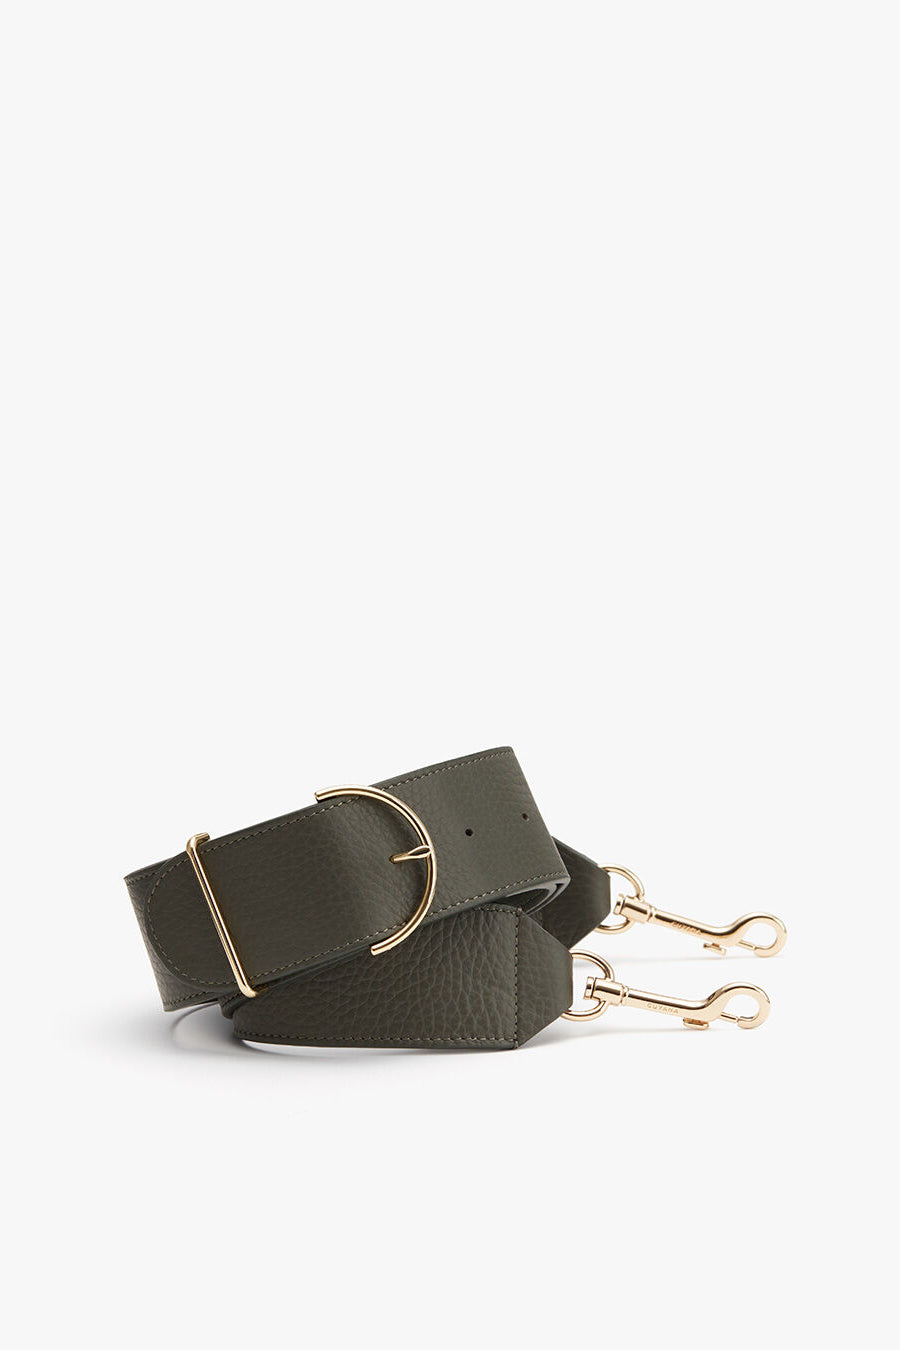 Small Easy Zipper Tote – Cuyana